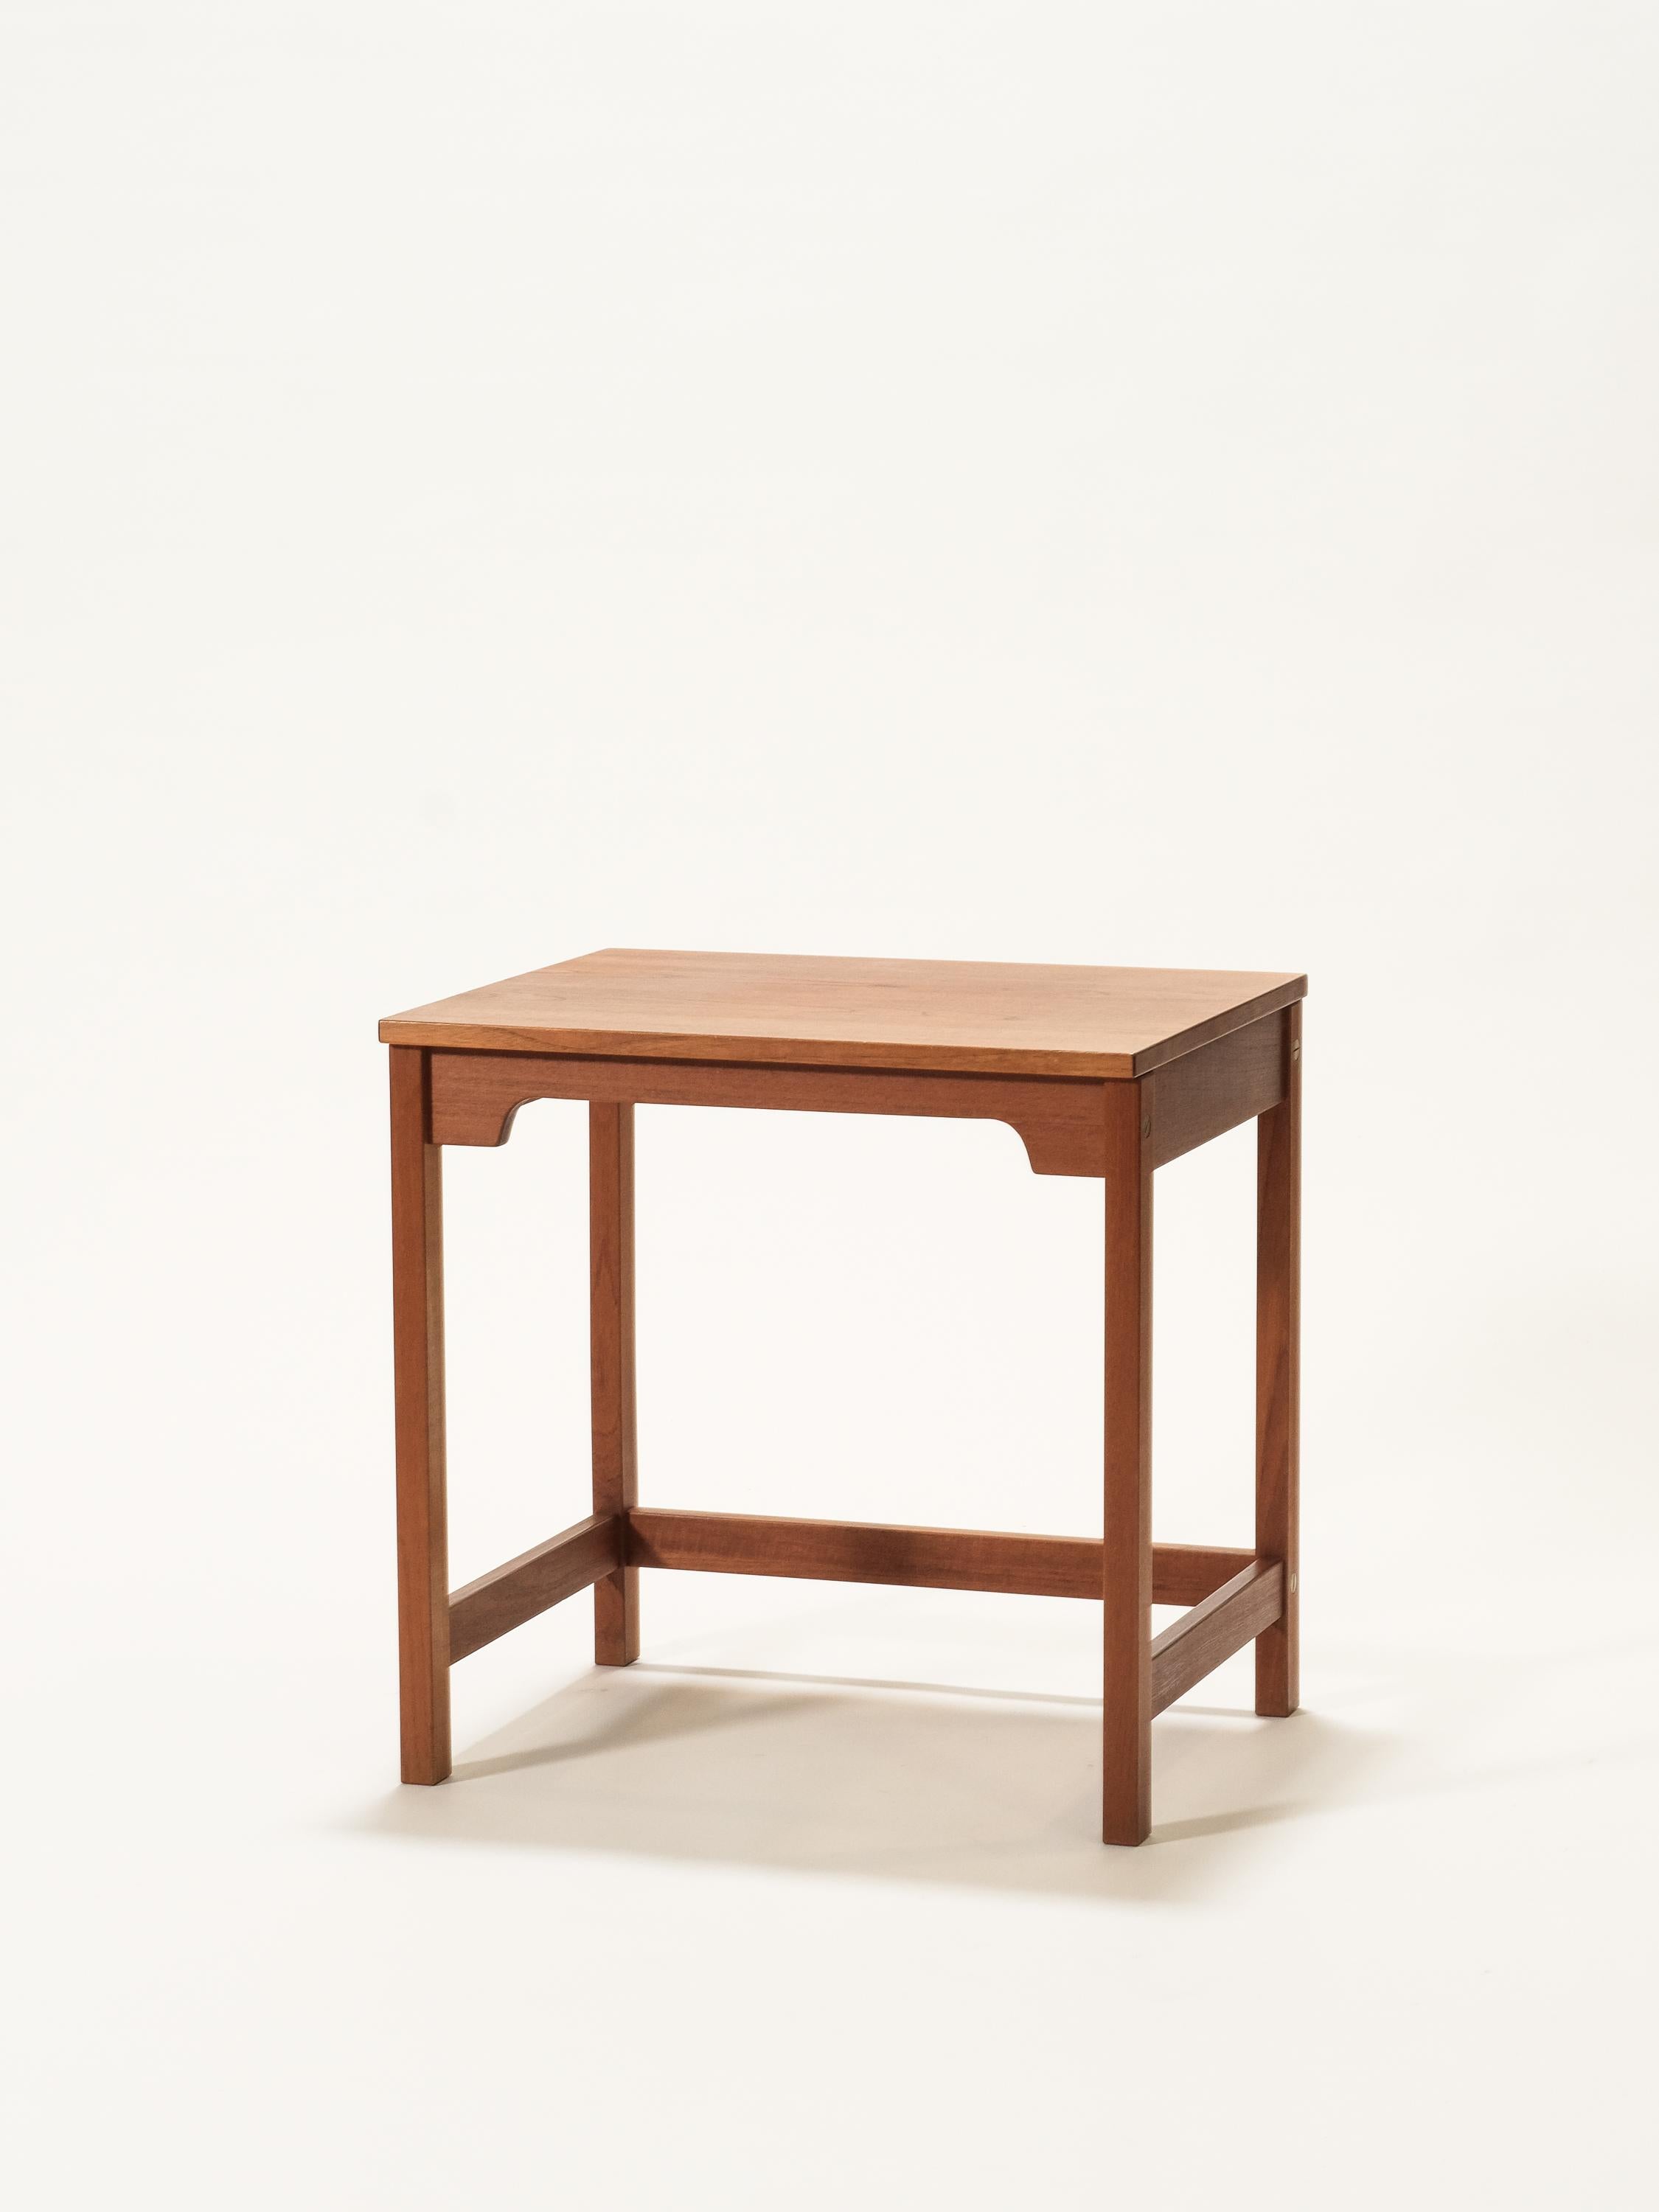 A rare teak desk or occassional side table ”Øresund” by Børge Mogensen for Karl Andersson & Söner in Sweden, 1960s.

Original makers label to the underside of the top. The teak wood is in great vintage condition.